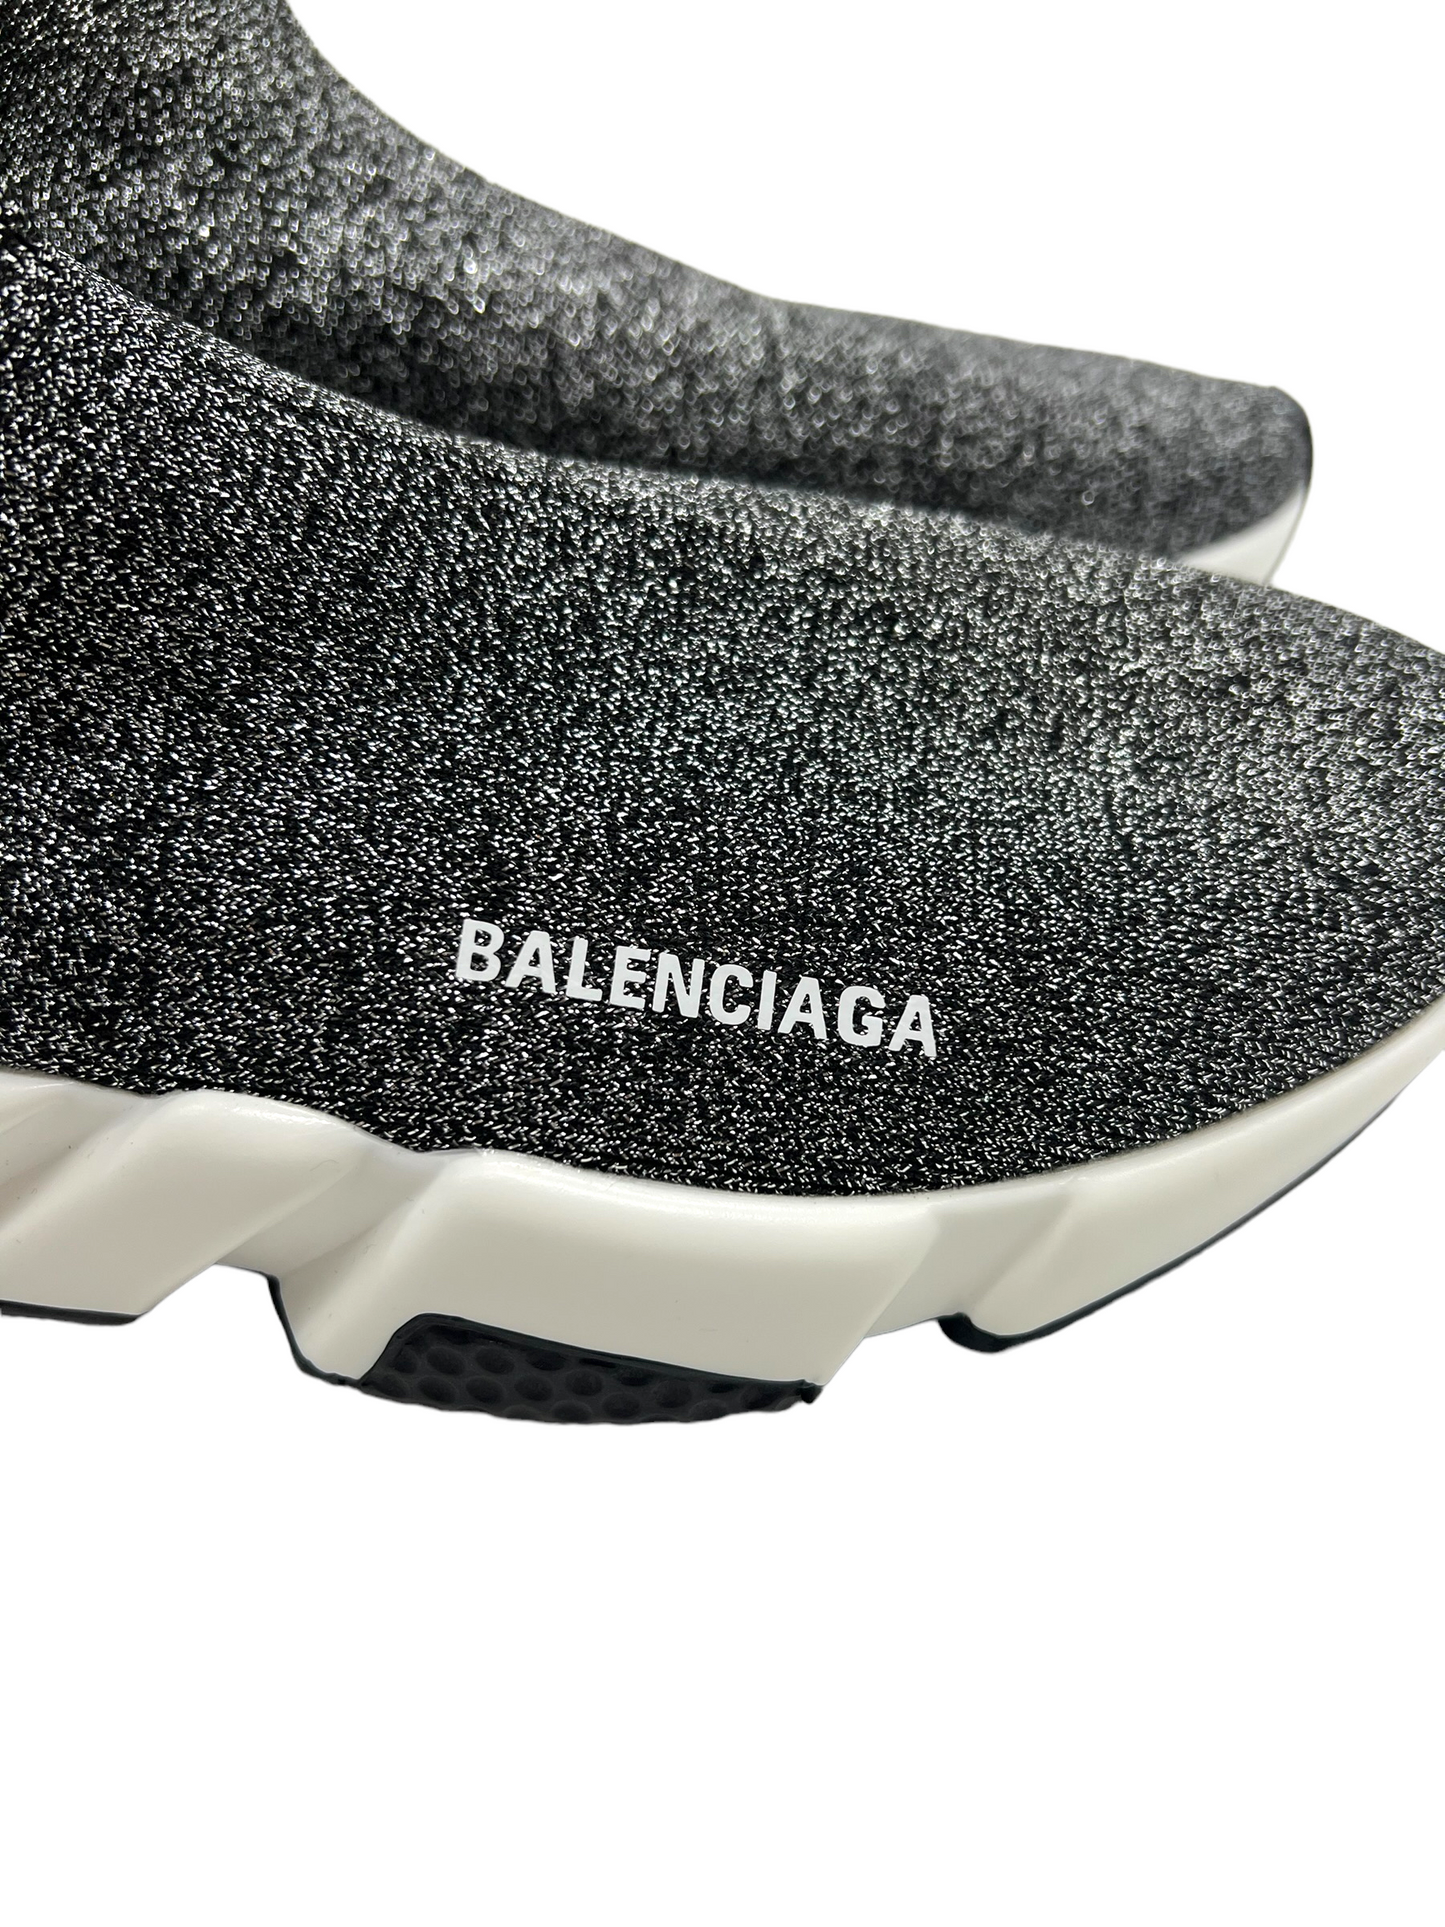 Balenciaga Black Metallic Size 38 Speed Trainers